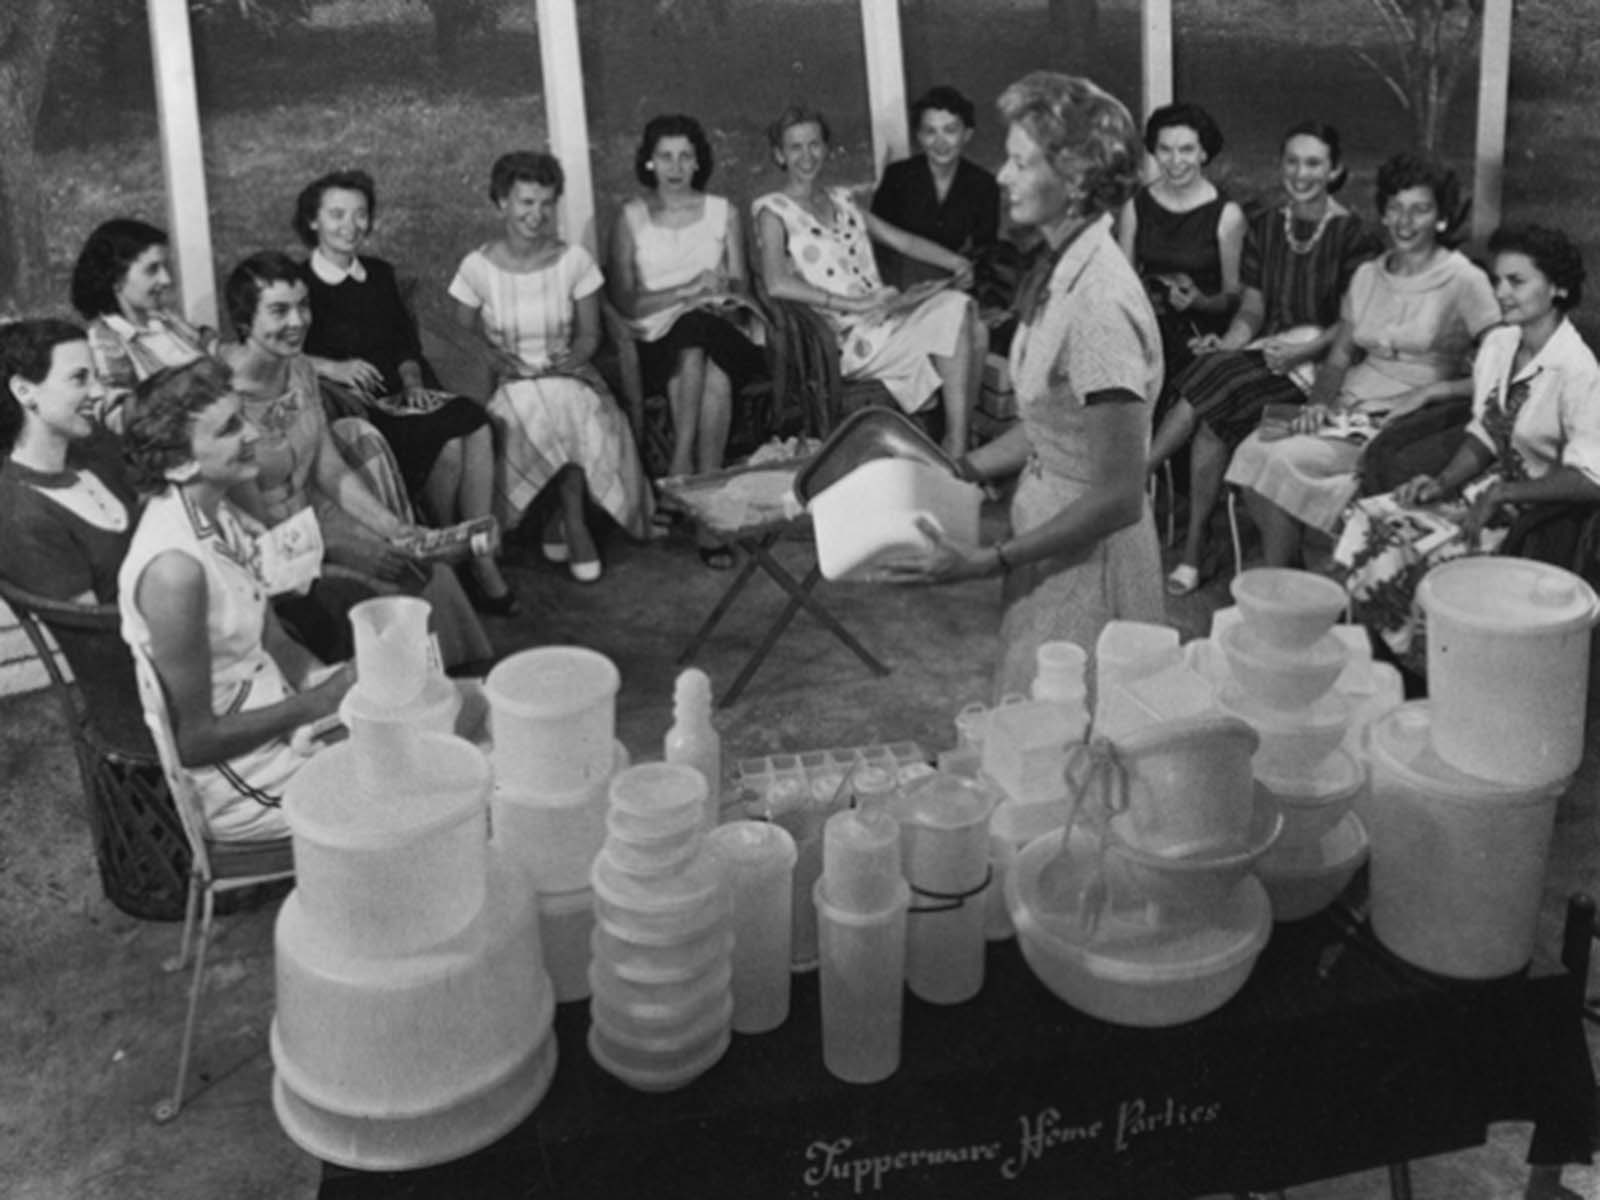 Tupperware home party in Sarasota, Florida. 1958.